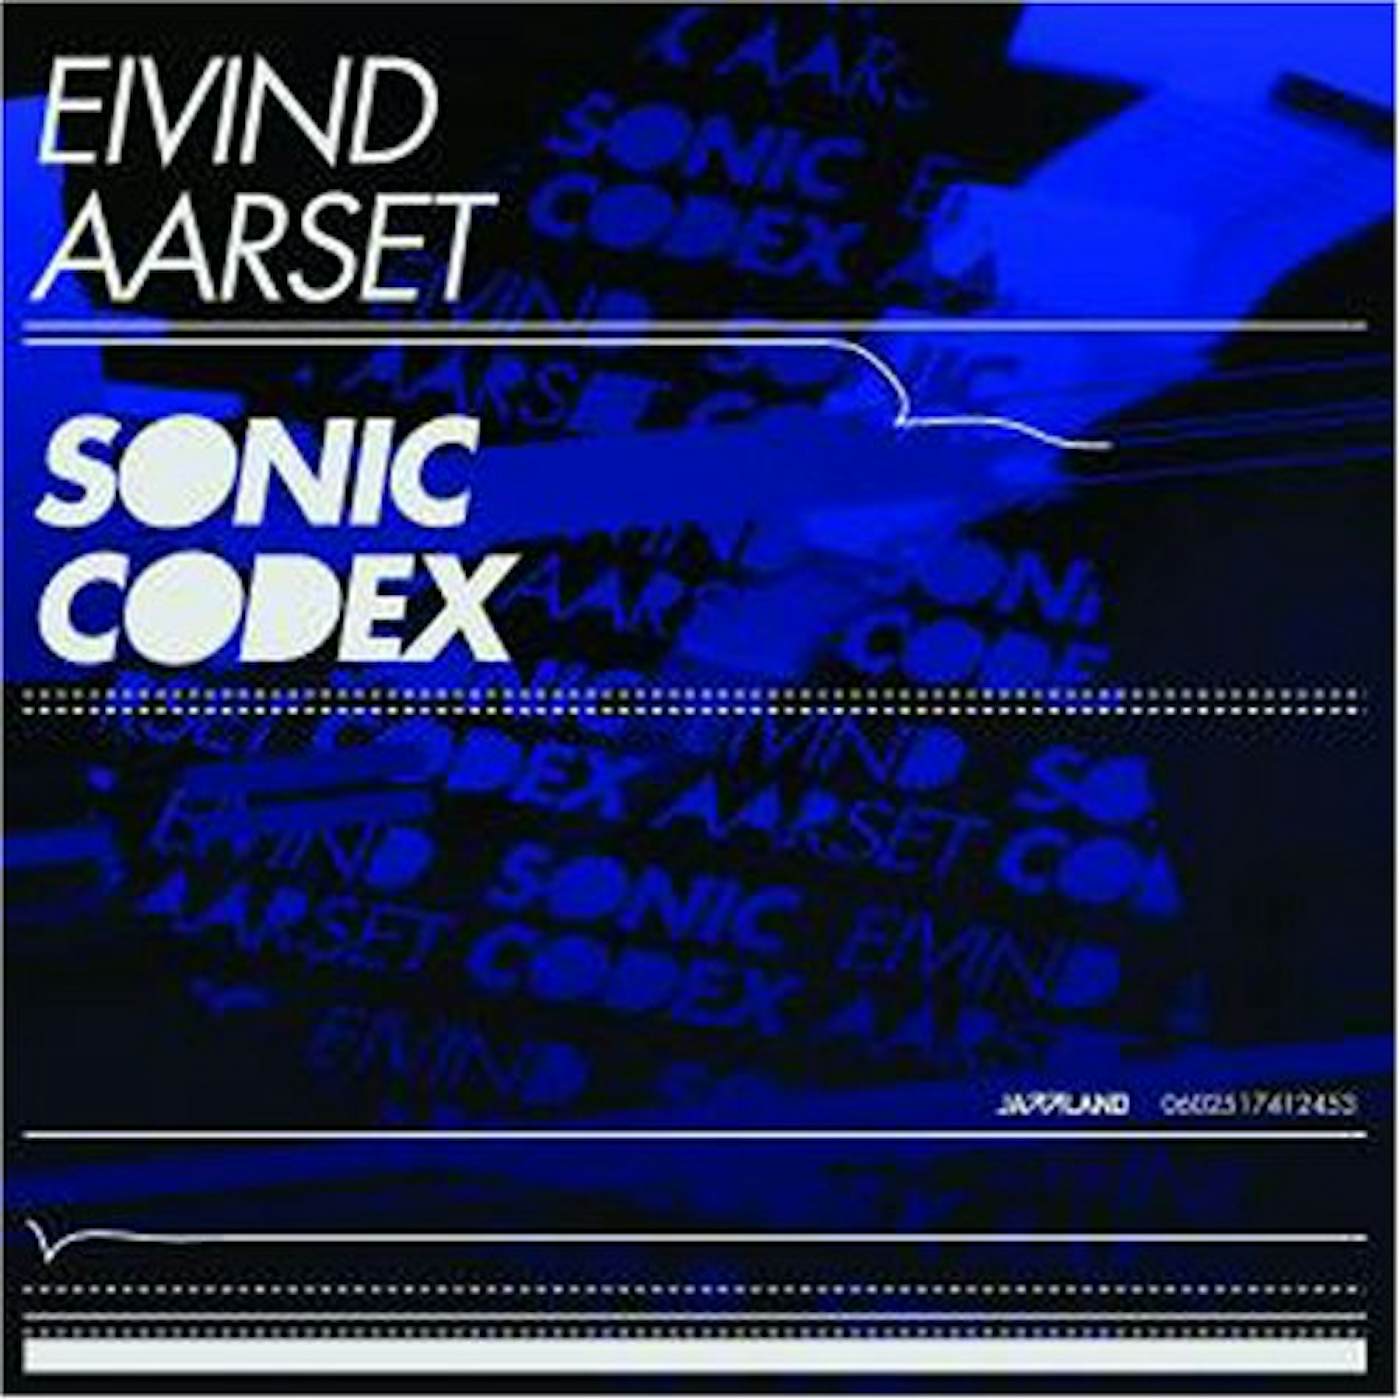 Eivind Aarset SONIC CODEX CD